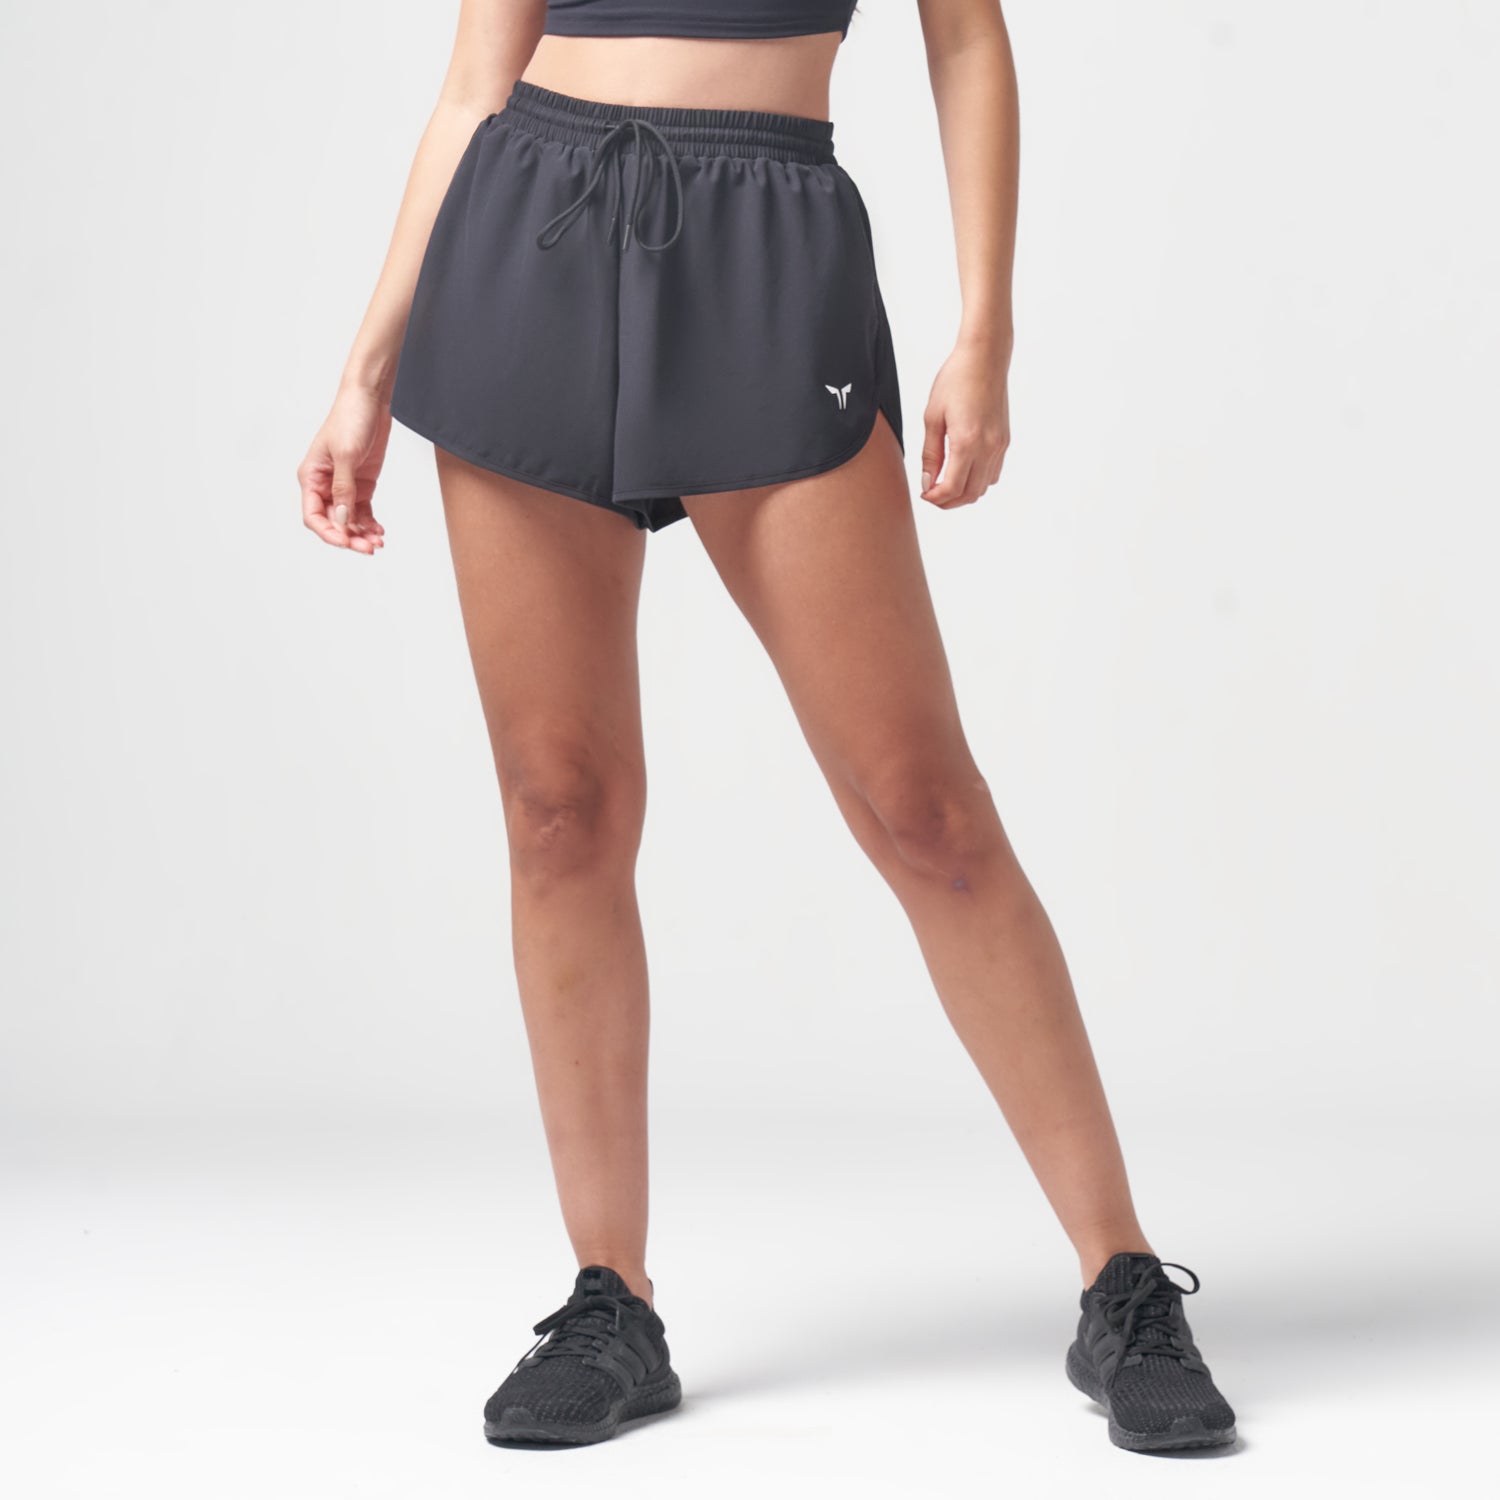 Essential Running Shorts - Black | Workout Shorts Women | SQUATWOLF